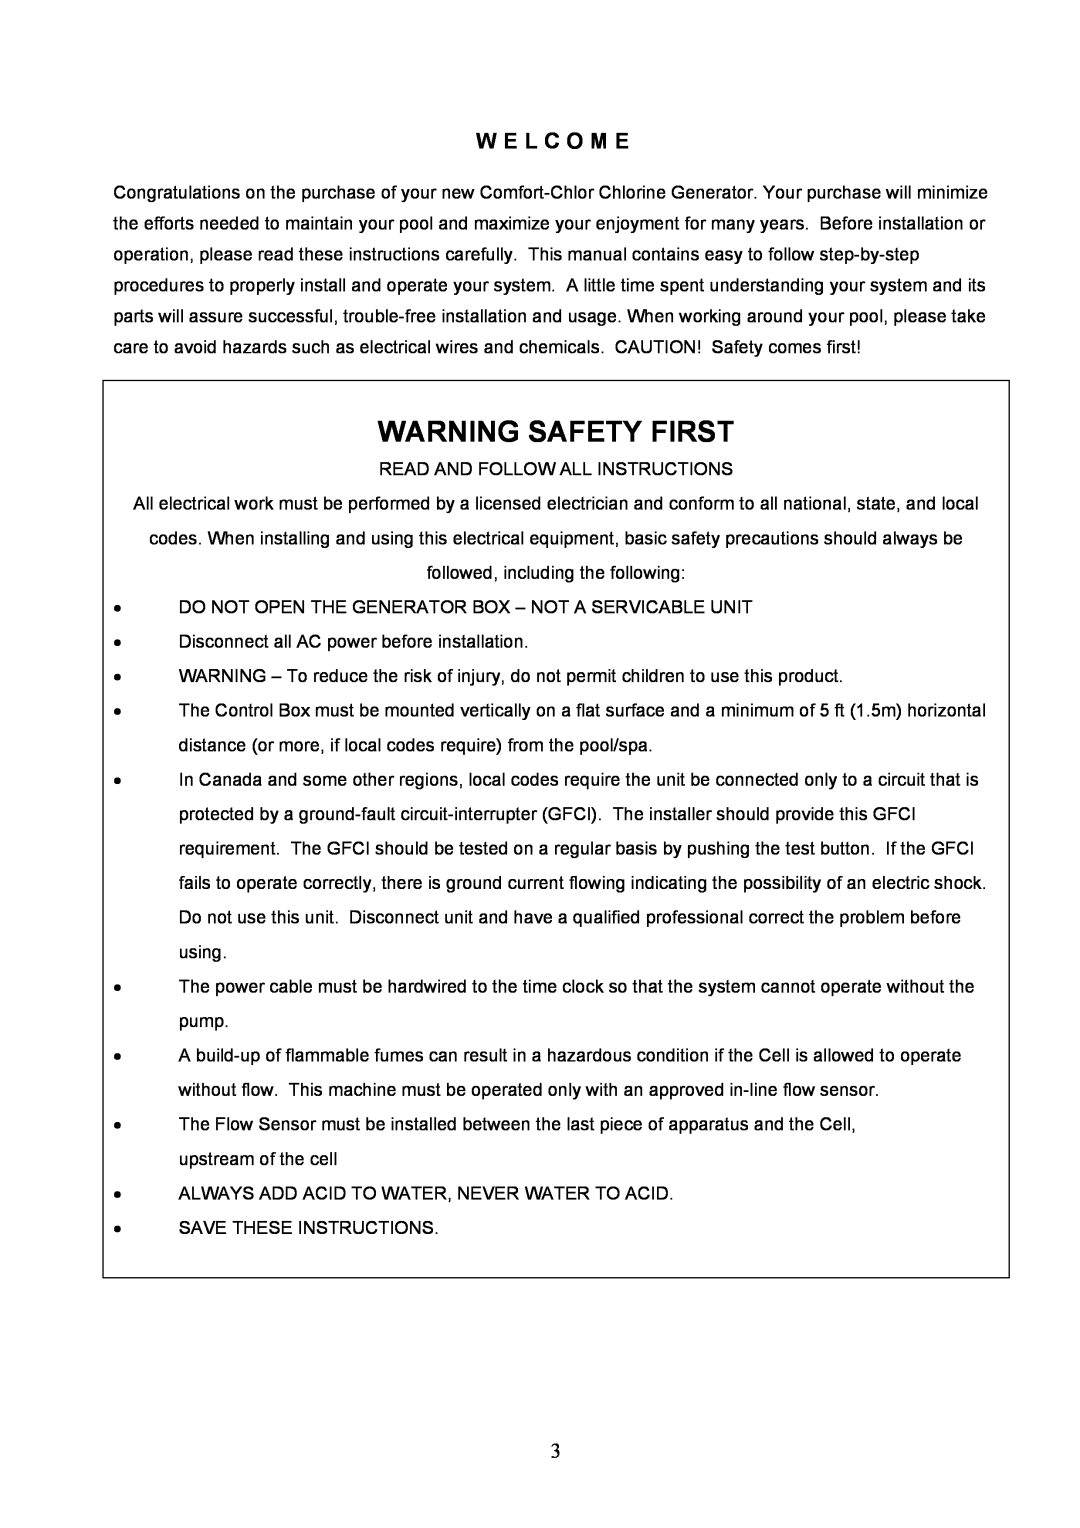 Aqua Products CC-550, CC-350 owner manual W E L C O M E, Warning Safety First 